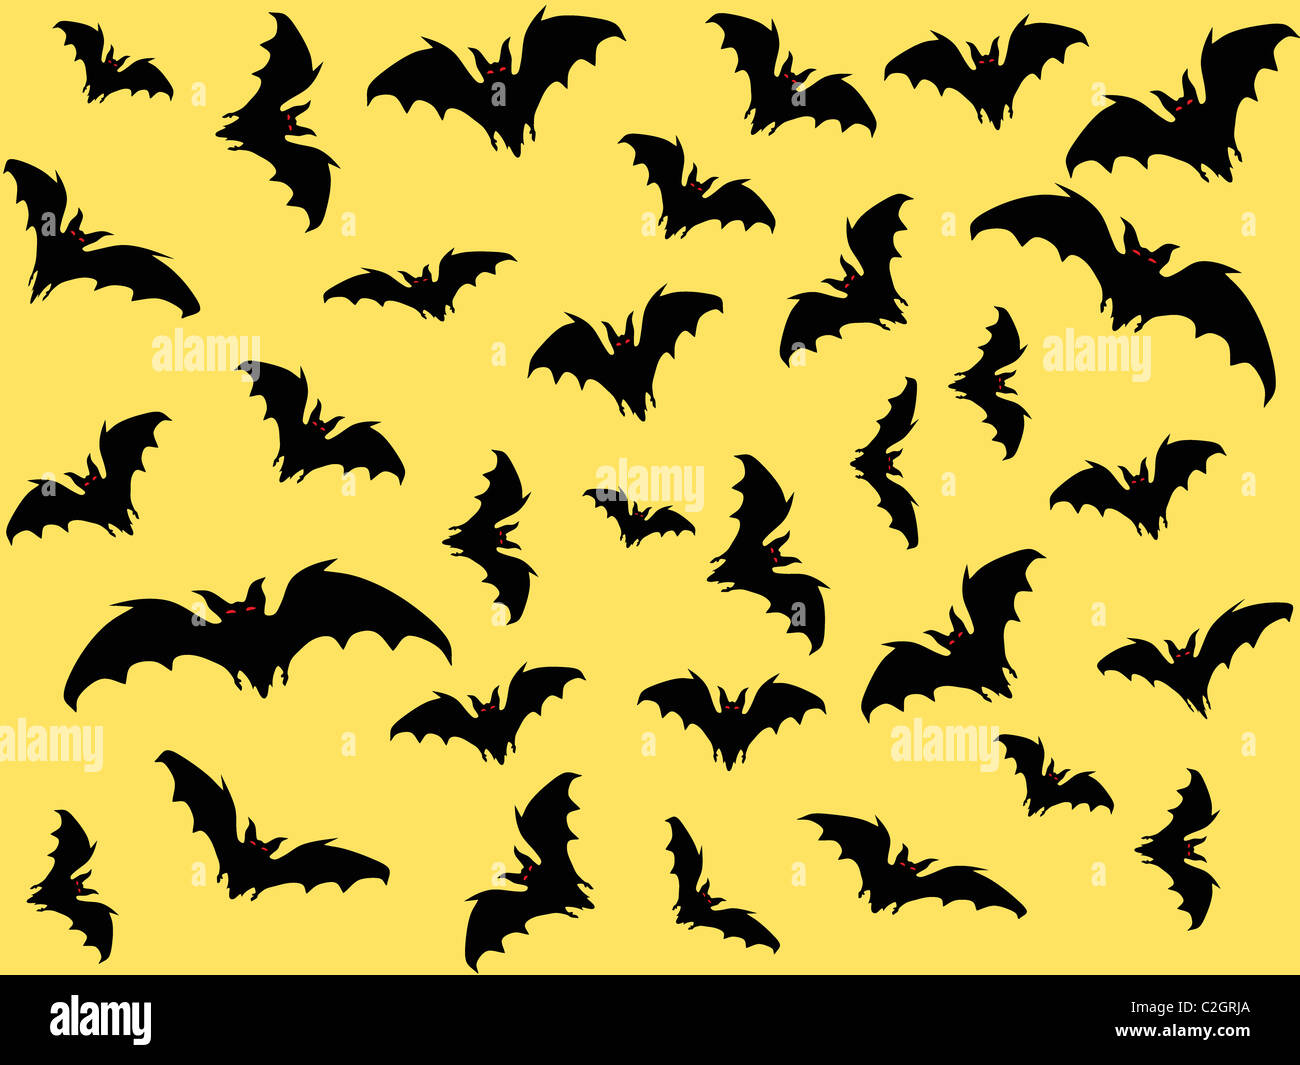 Bats. Stock Photo